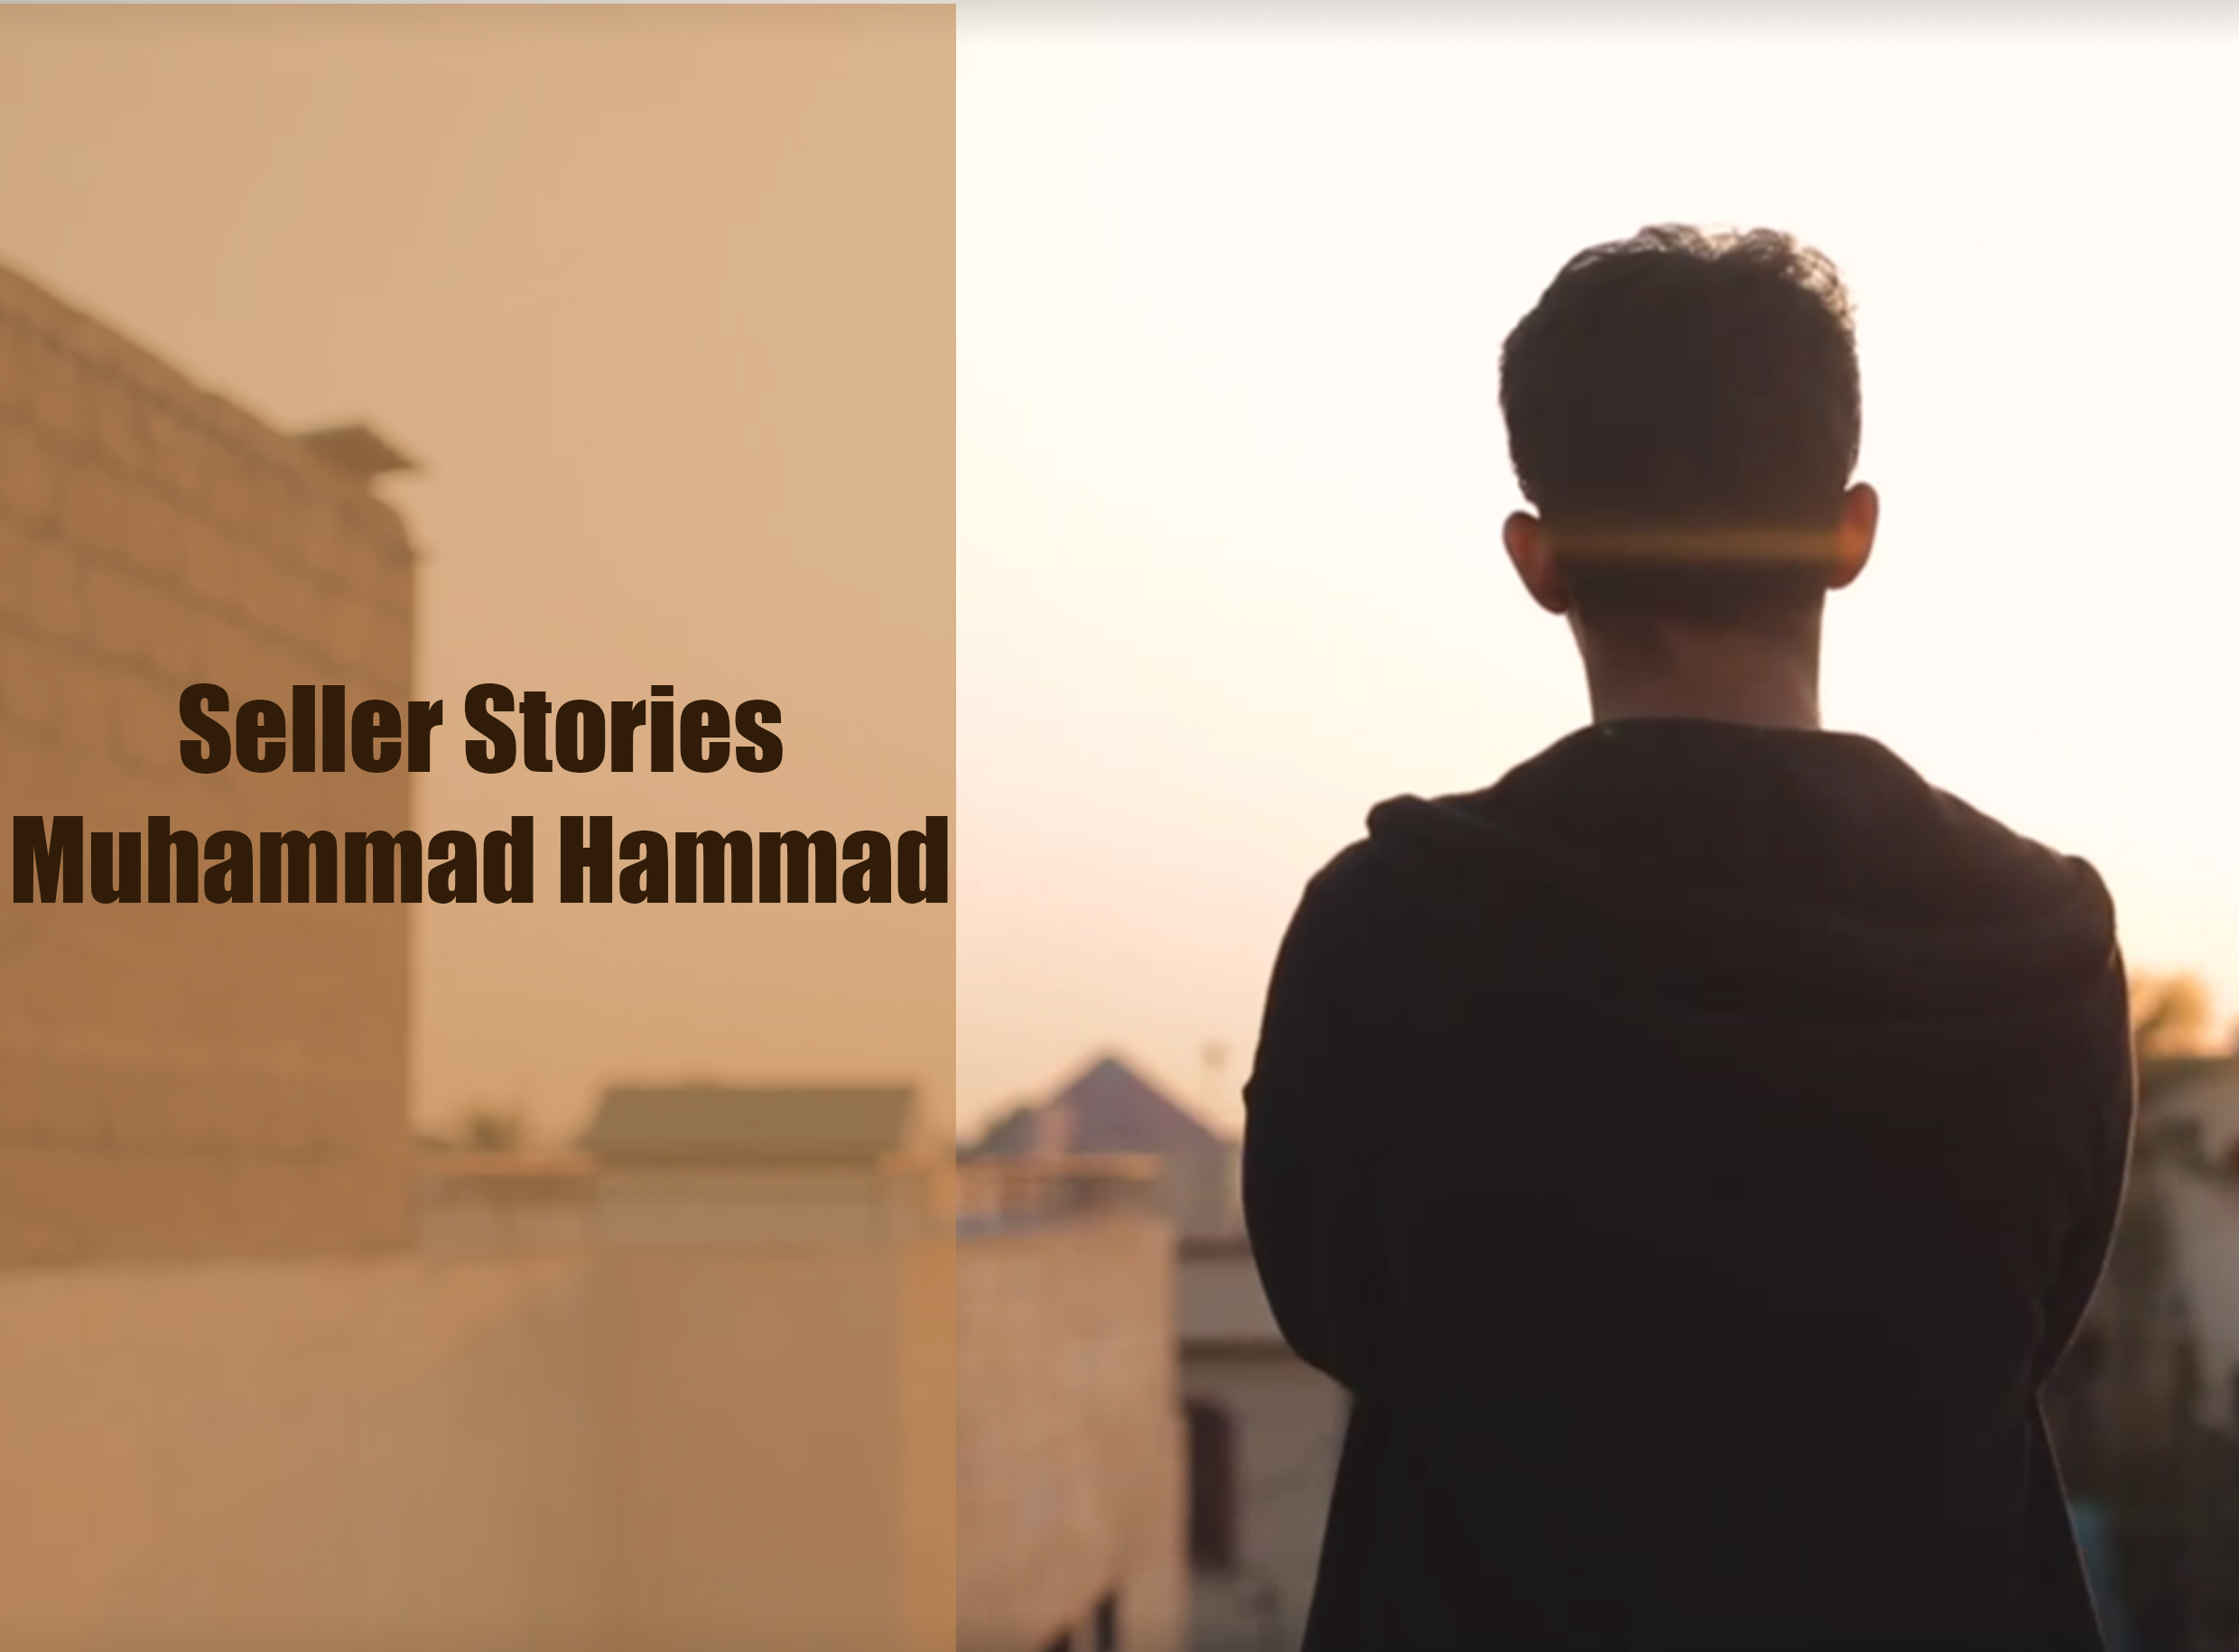  Daraz Seller Stories: Hammad’s Inspiring Tale of Entrepreneurship at 17